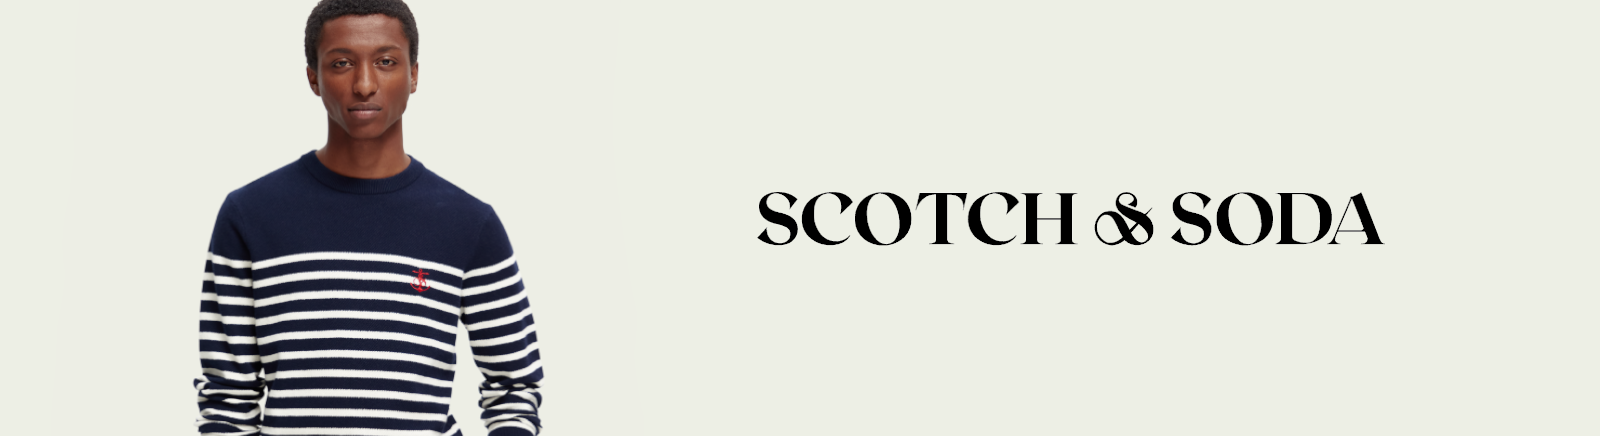 Scotch & Soda Markenschuhe online kaufen im GISY Schuhe Shop